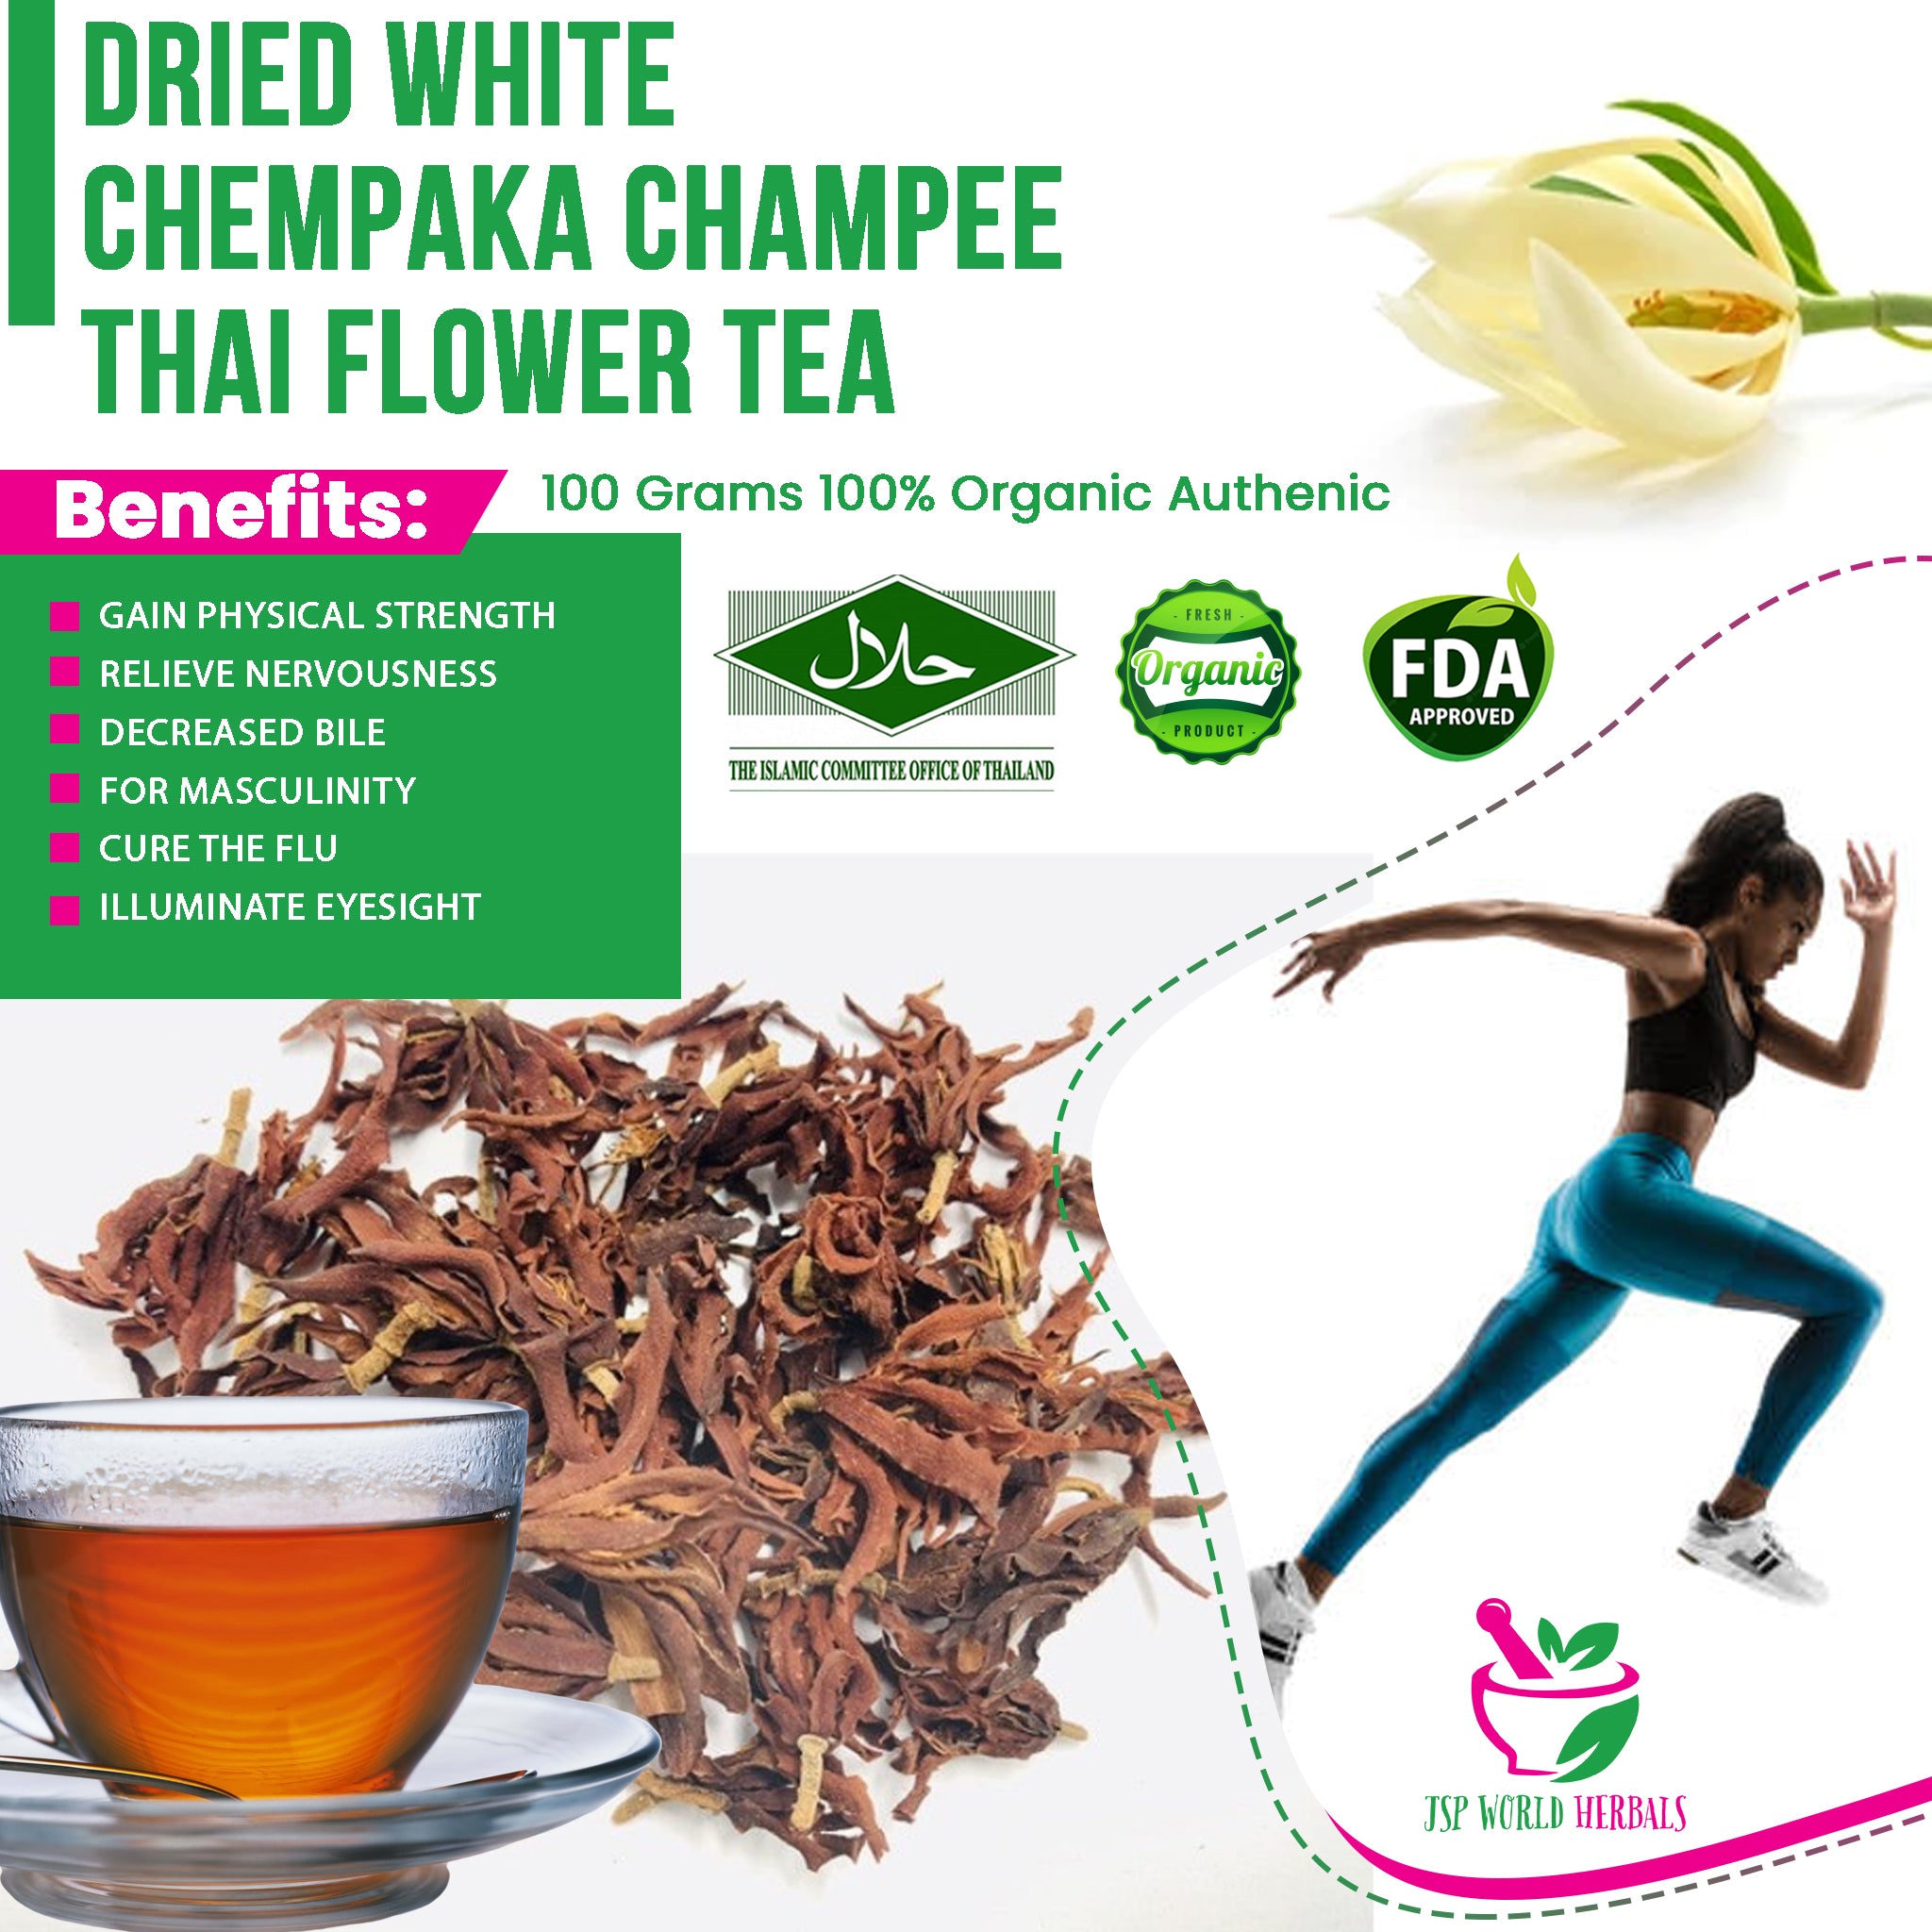 Dried White Chempaka Champee Thai Flower Tea 100 Grams 100% Organic Authenic